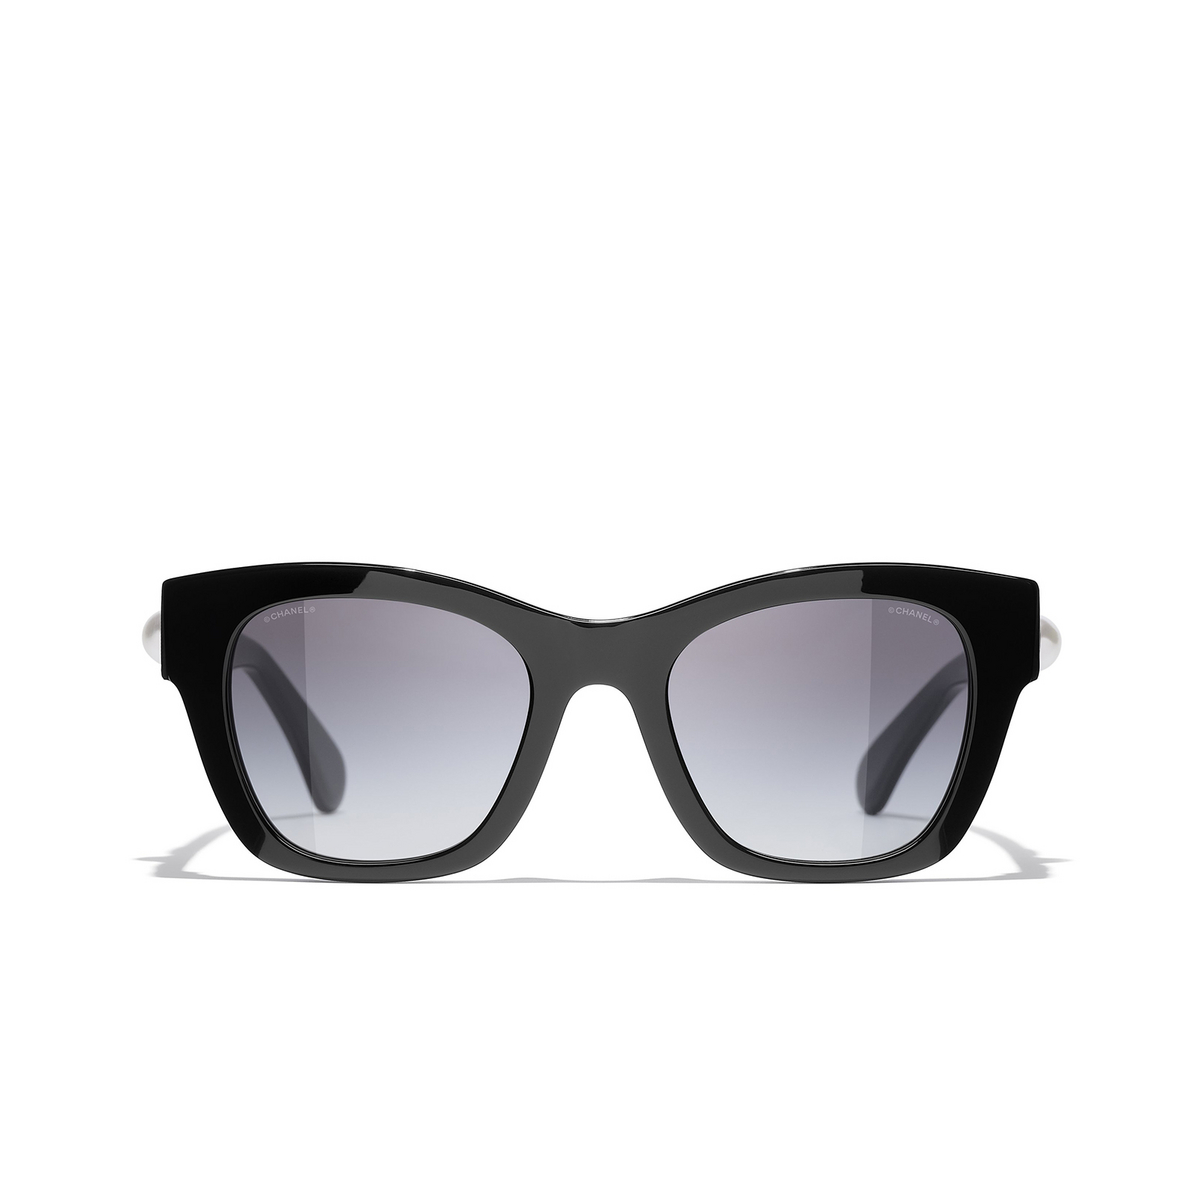 CHANEL square Sunglasses C622S6 Black - front view